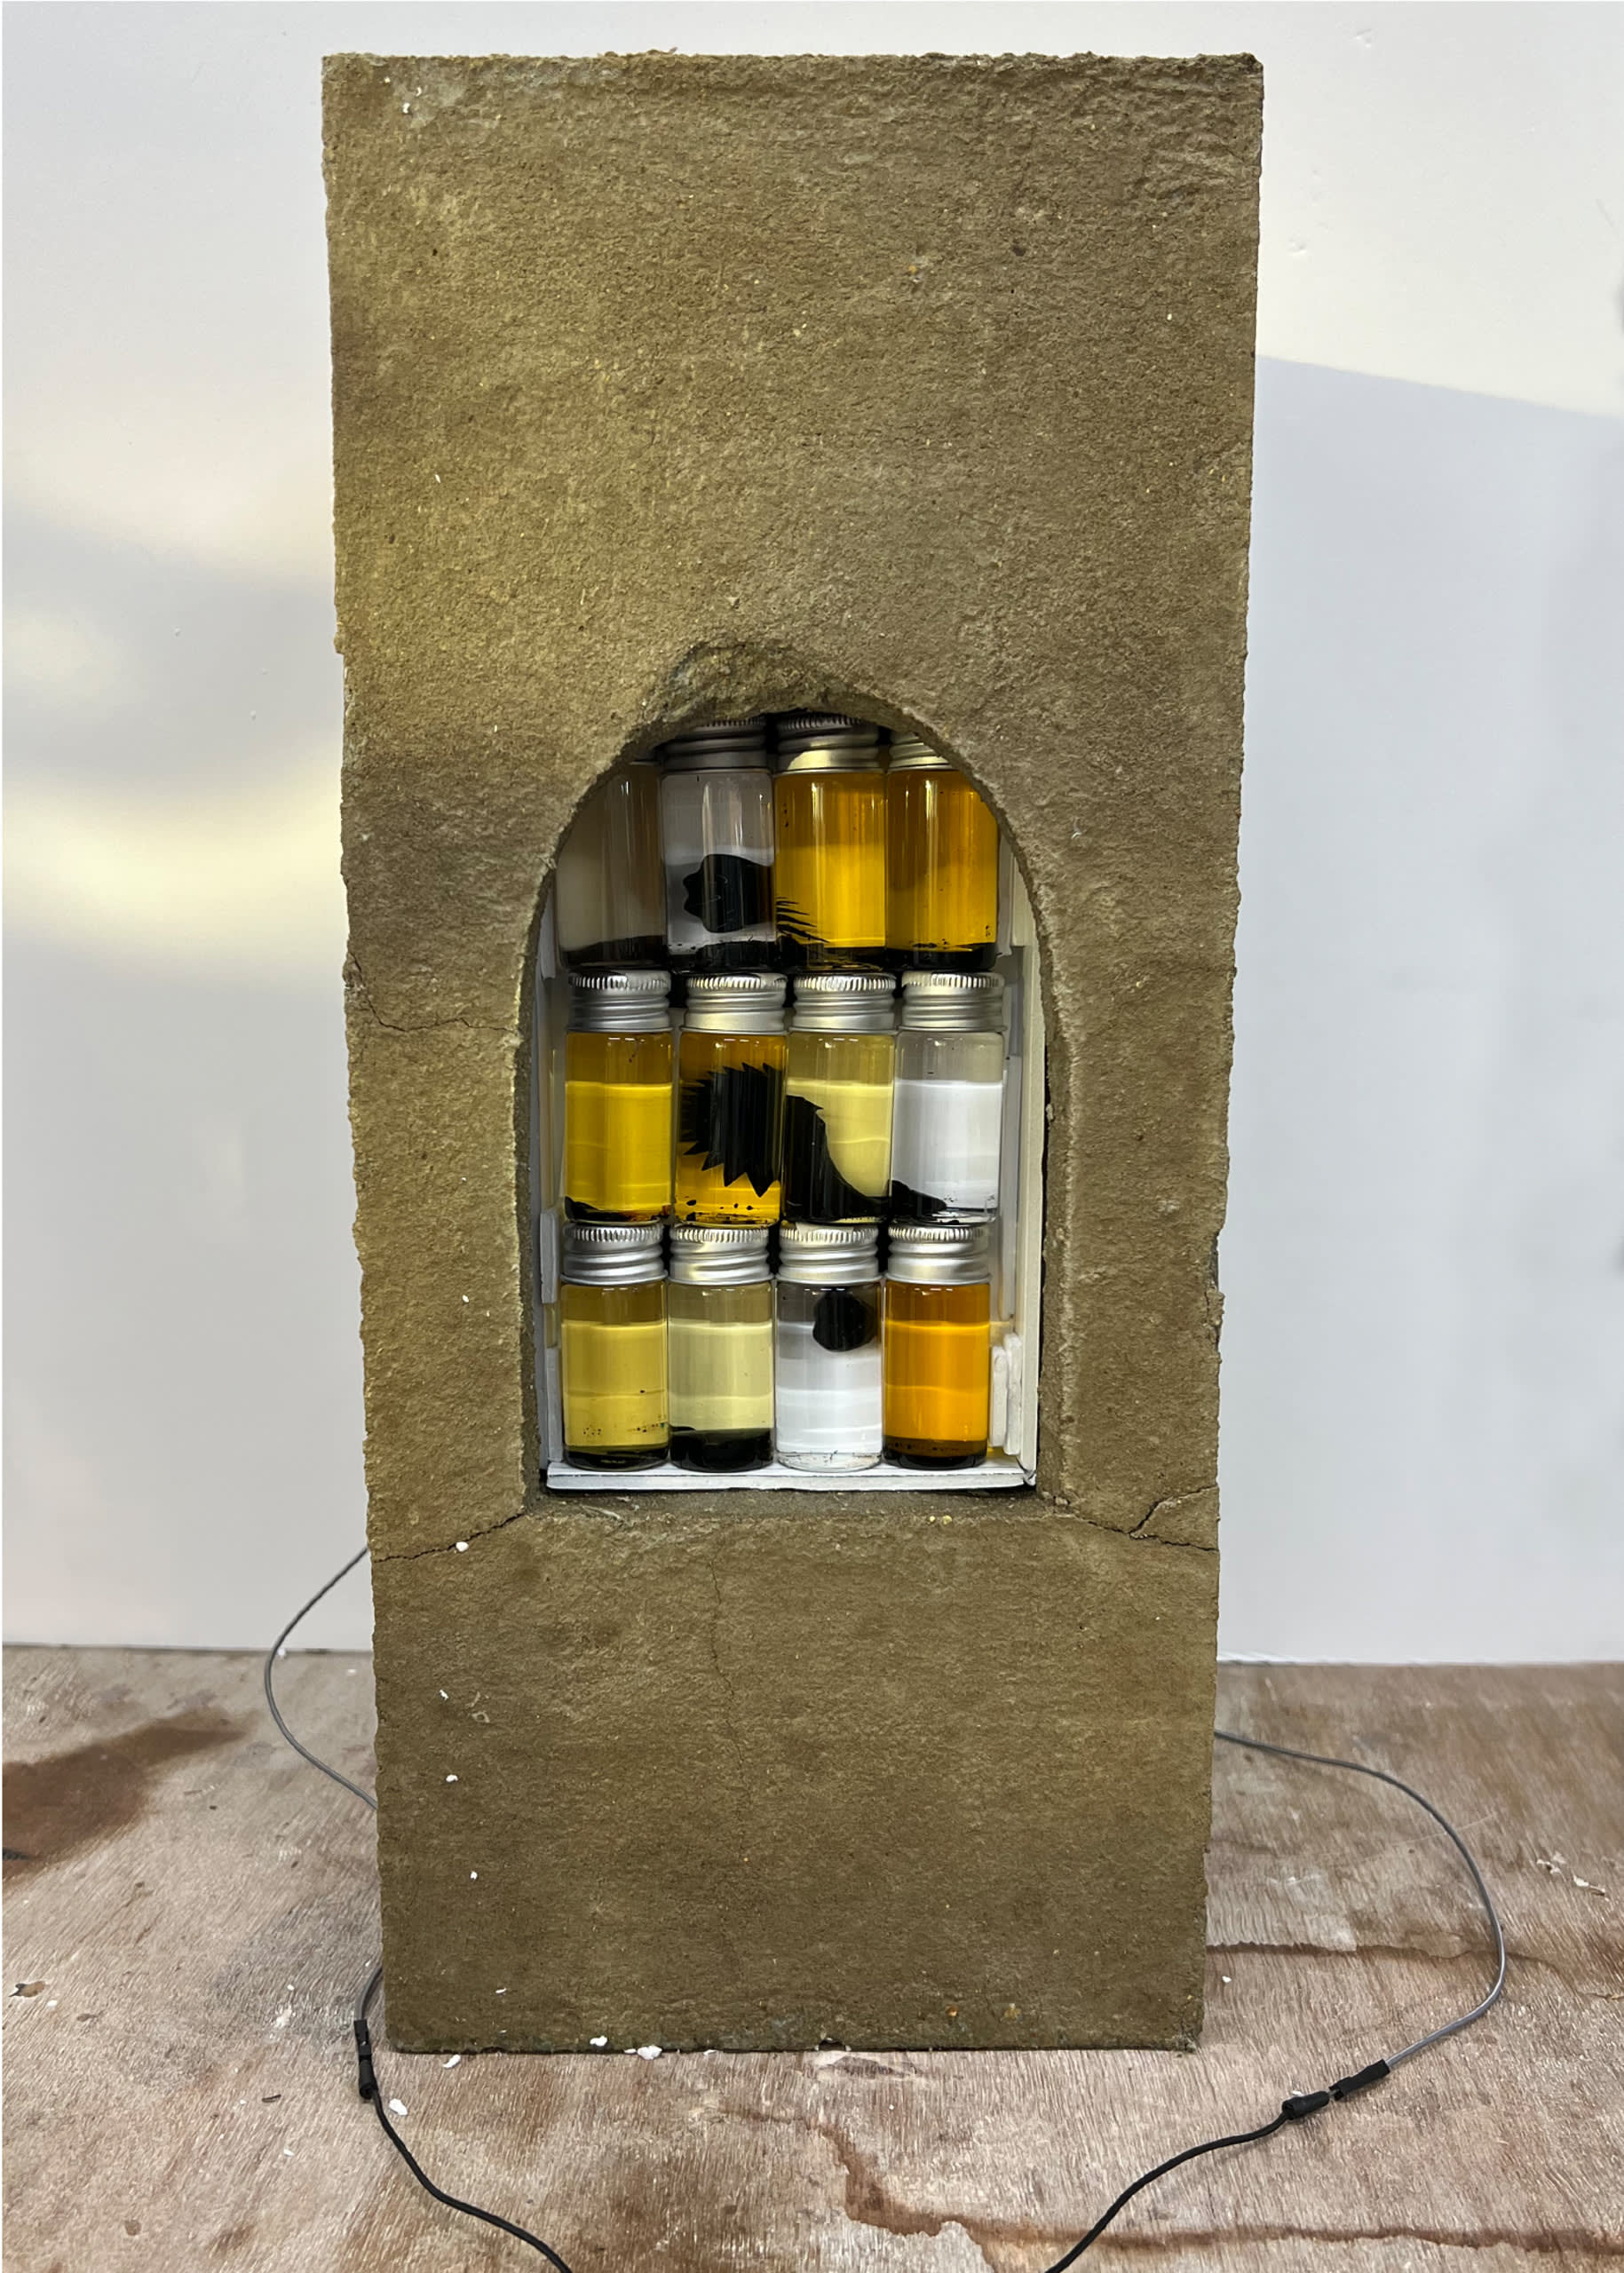 Subject <--> Matter Sculpture, Concrete box with window with vials of ferrofluid.